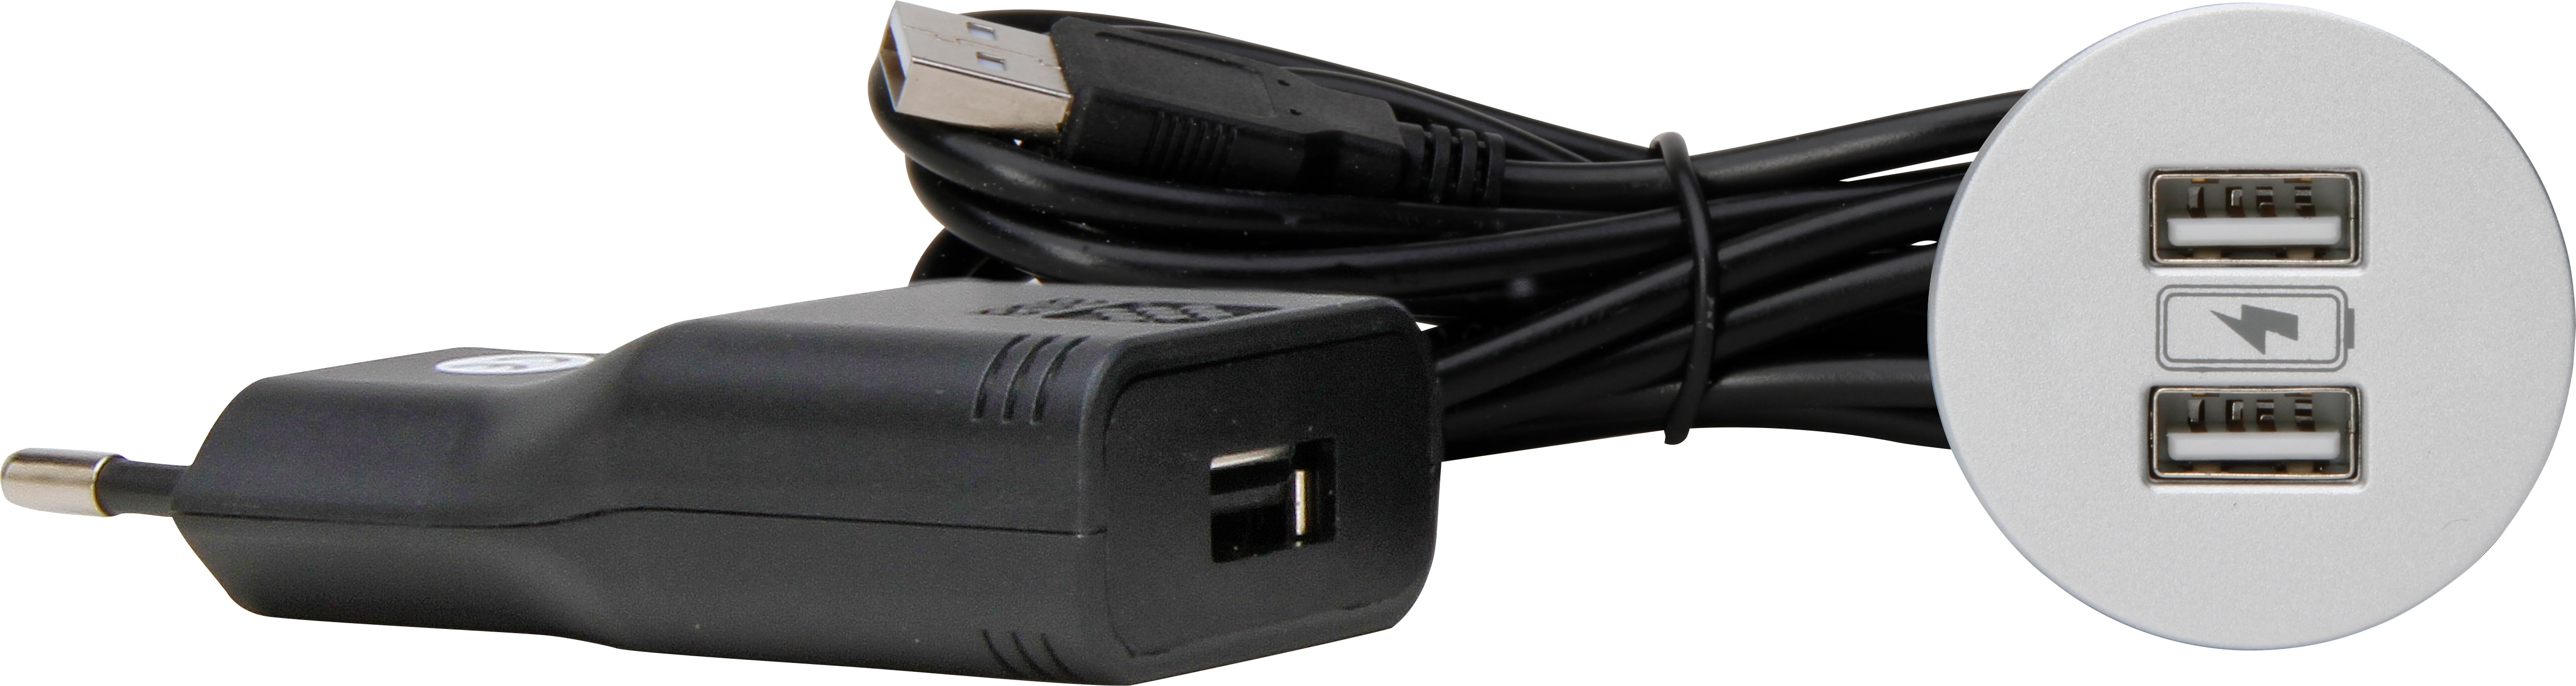 Kopp 939721010 VersaPICK USB Einbauset mit 2x USB, rund, alu, Kunststoff